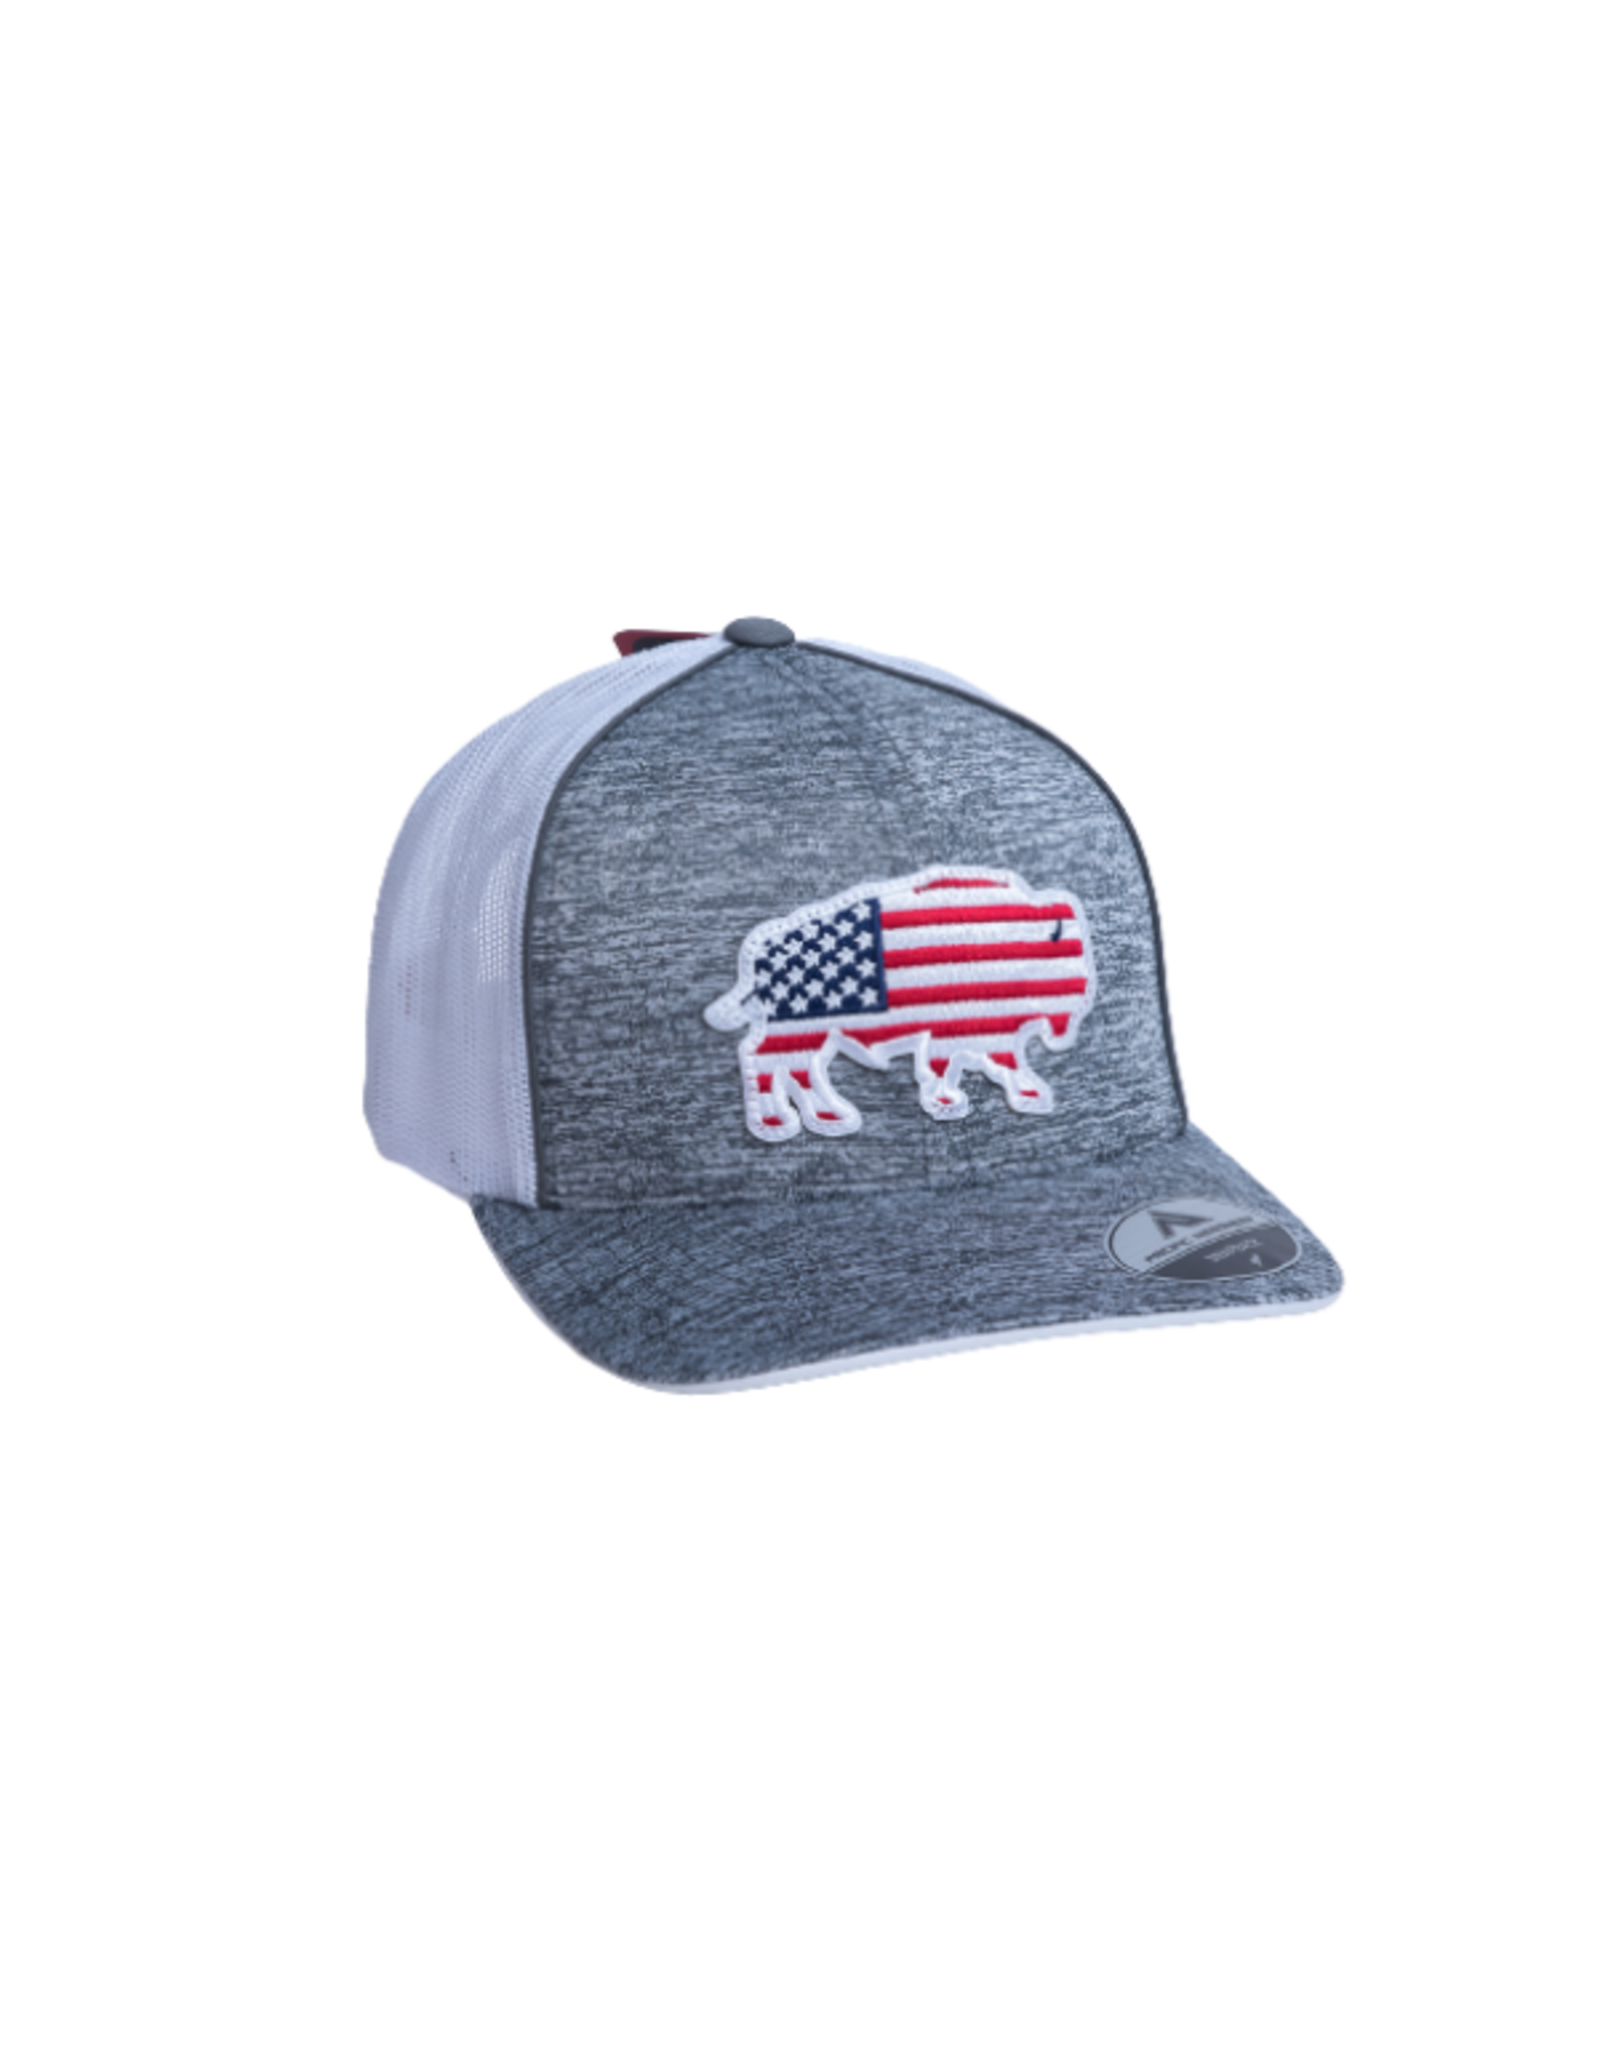 Red Dirt Hat Company USA Buffalo Grey/White RDHC1 Cap